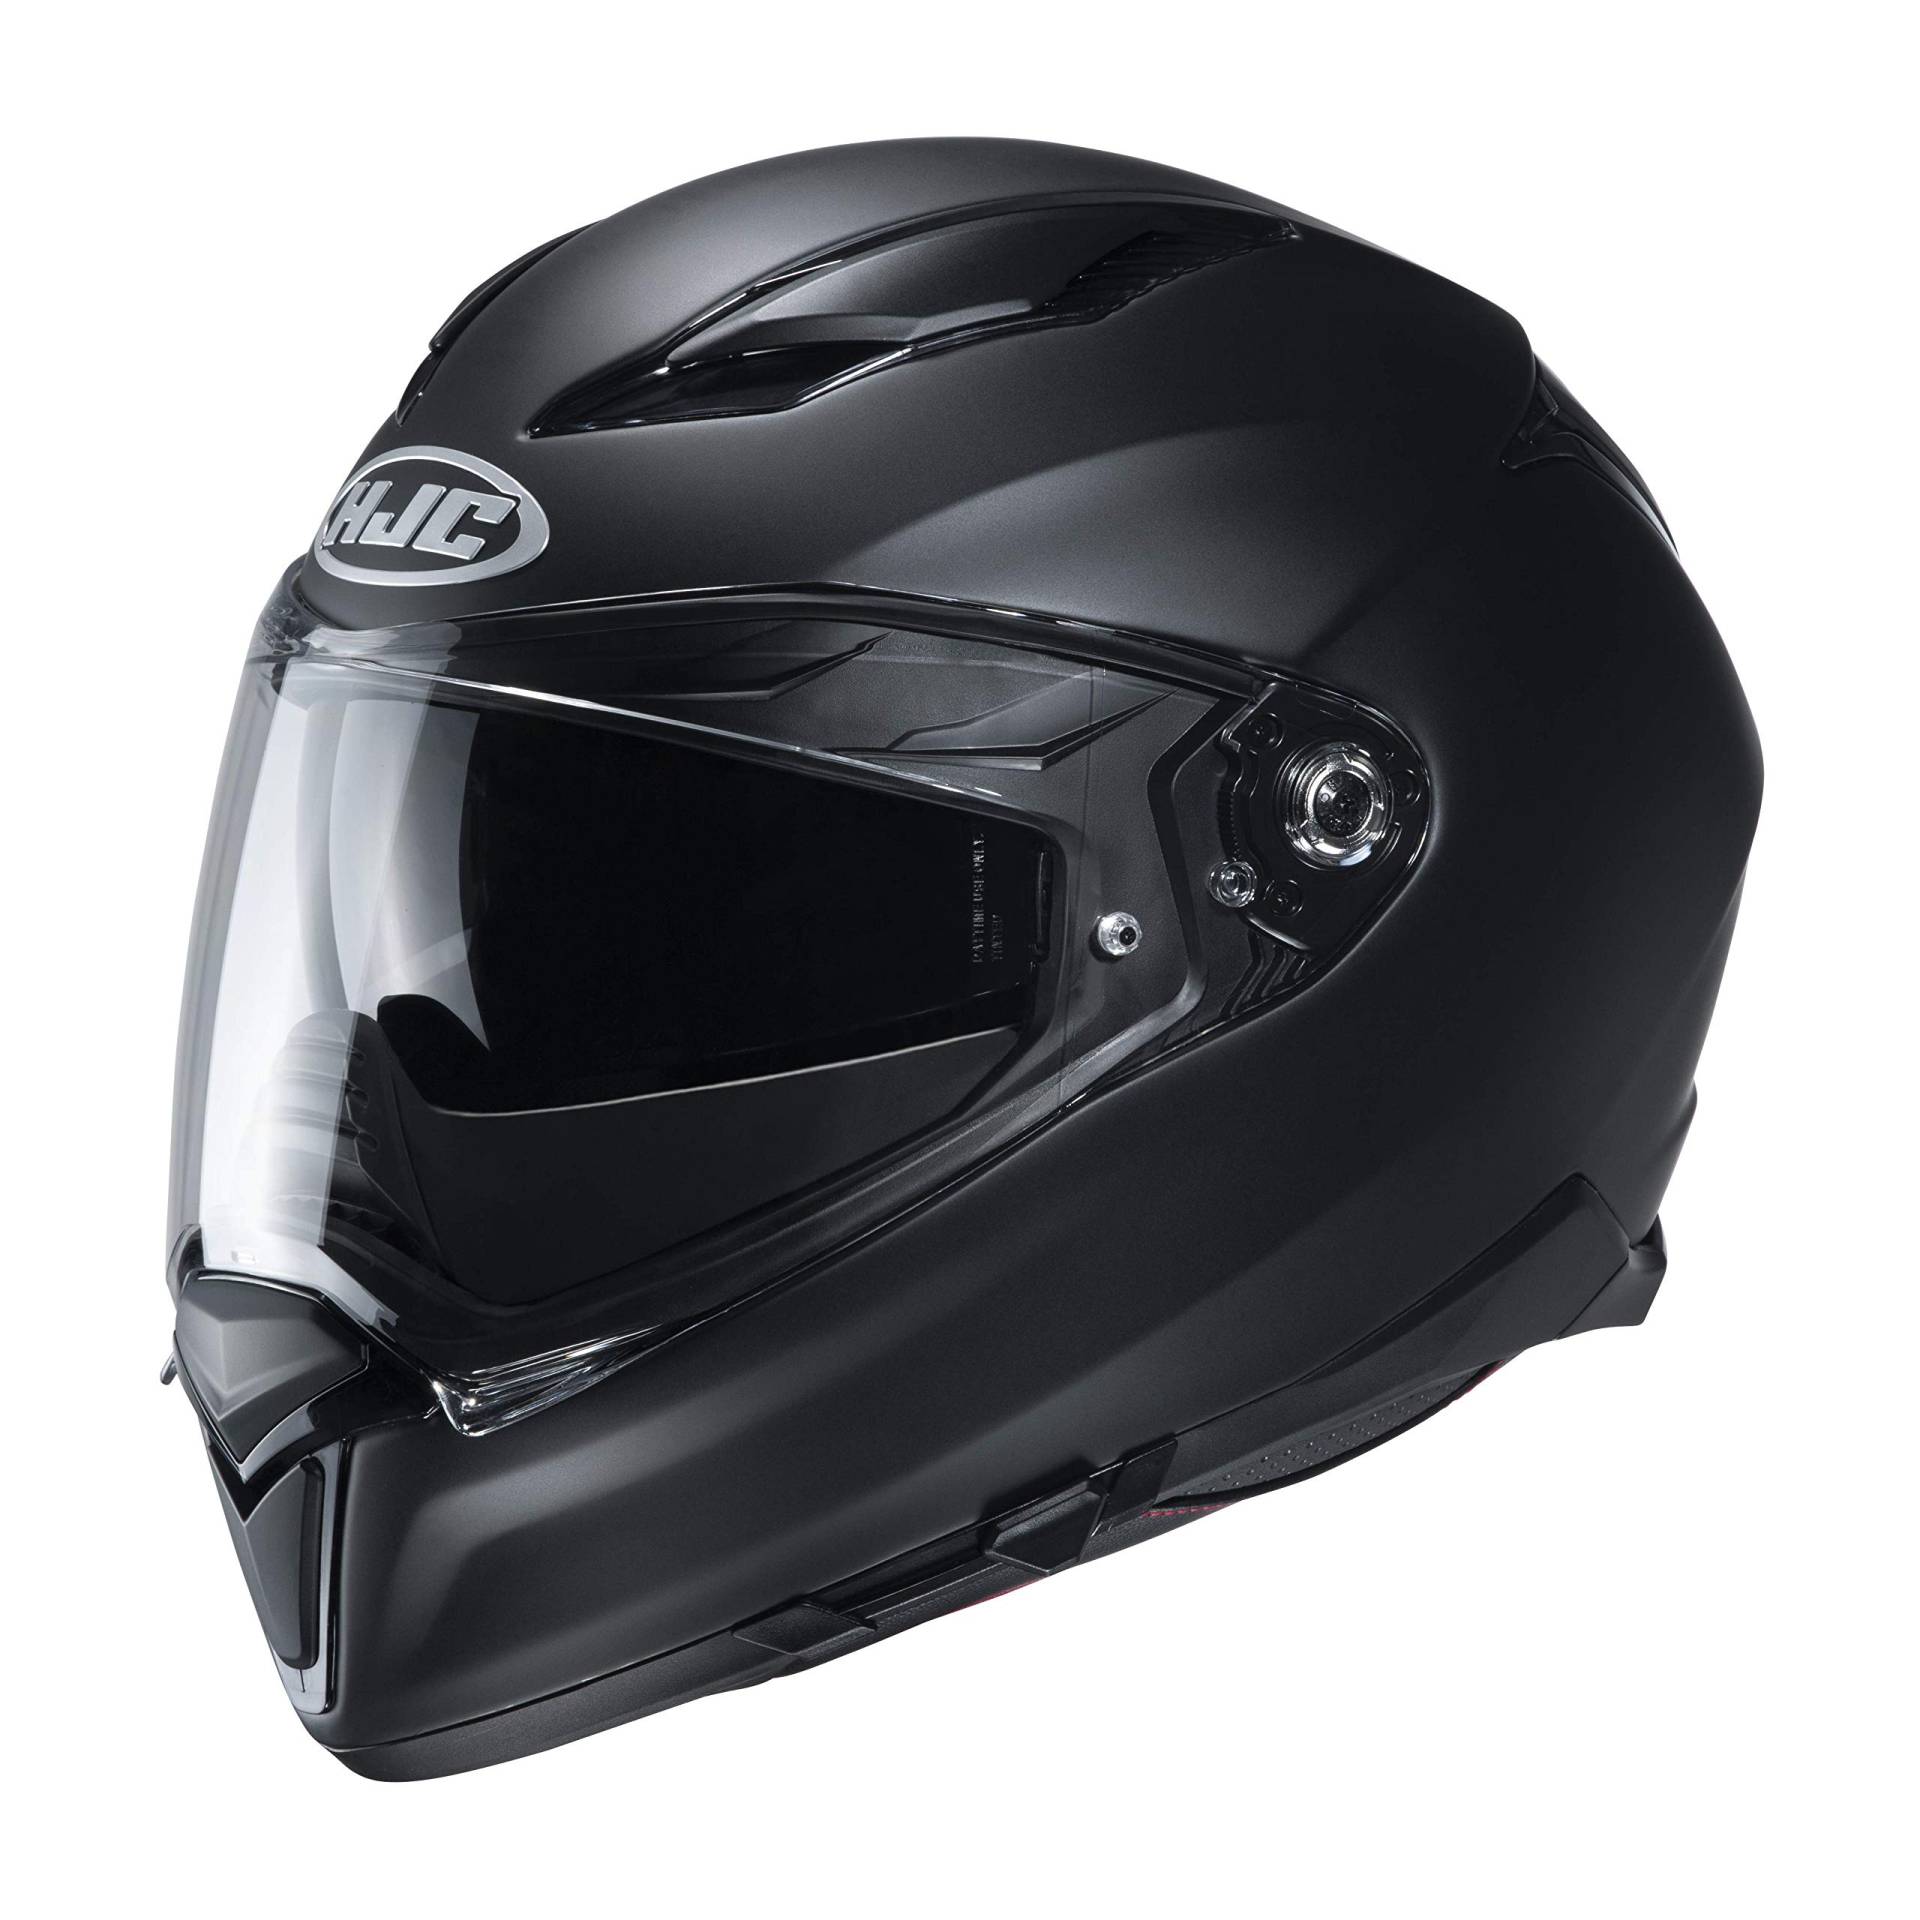 HJC Helmets Motorradhelm HJC F70 SEMI MAT Schwarz/SEMI FLAT BLACK, Schwarz, S 15267007 von HJC Helmets